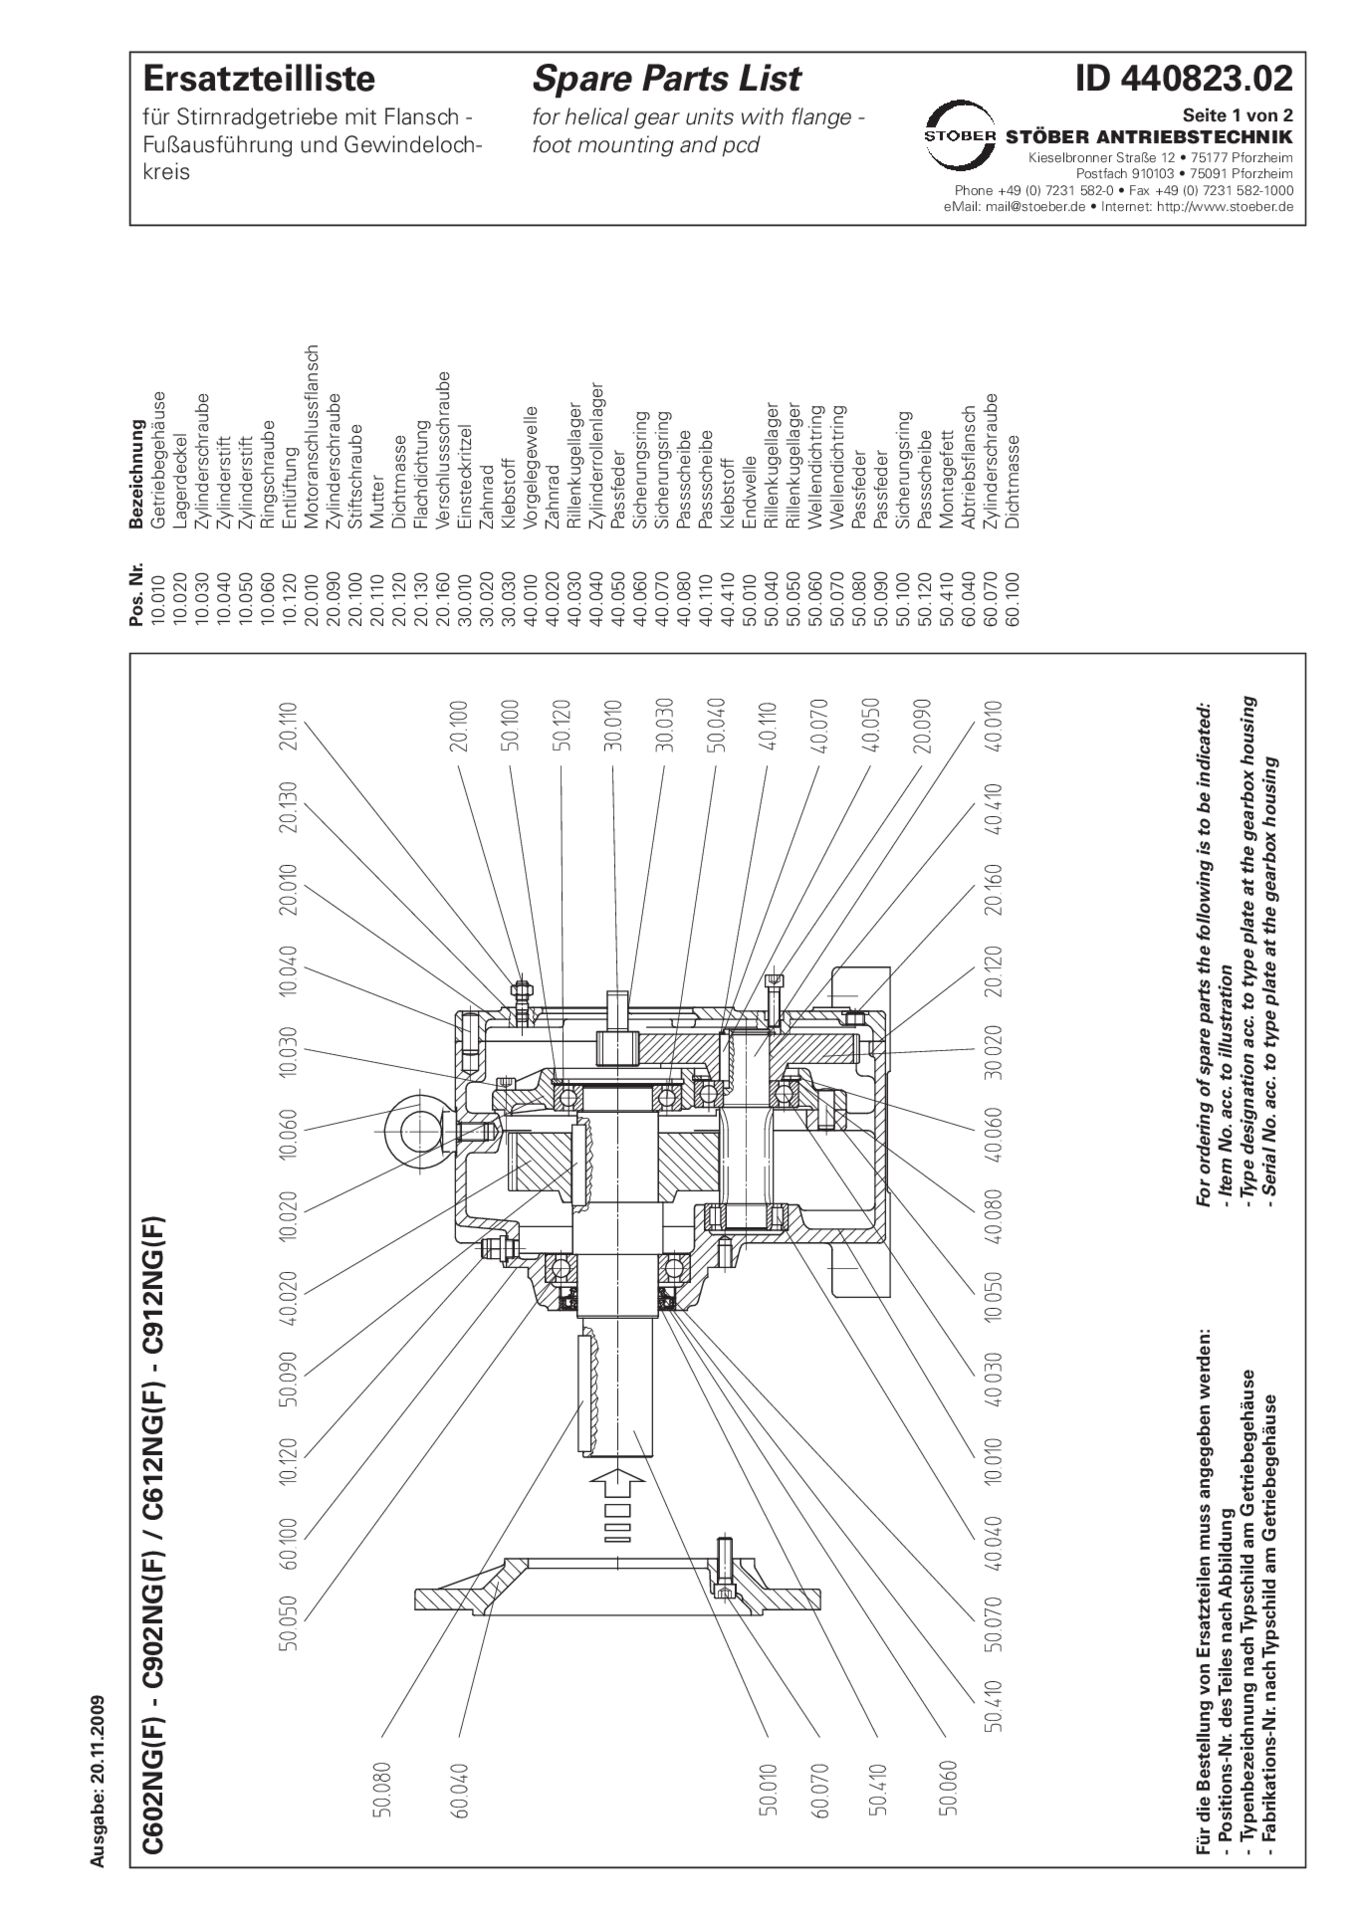 Replacement parts list helical gear units C602 C612 C702 C712 C802 C812 C902 C912 NG NF